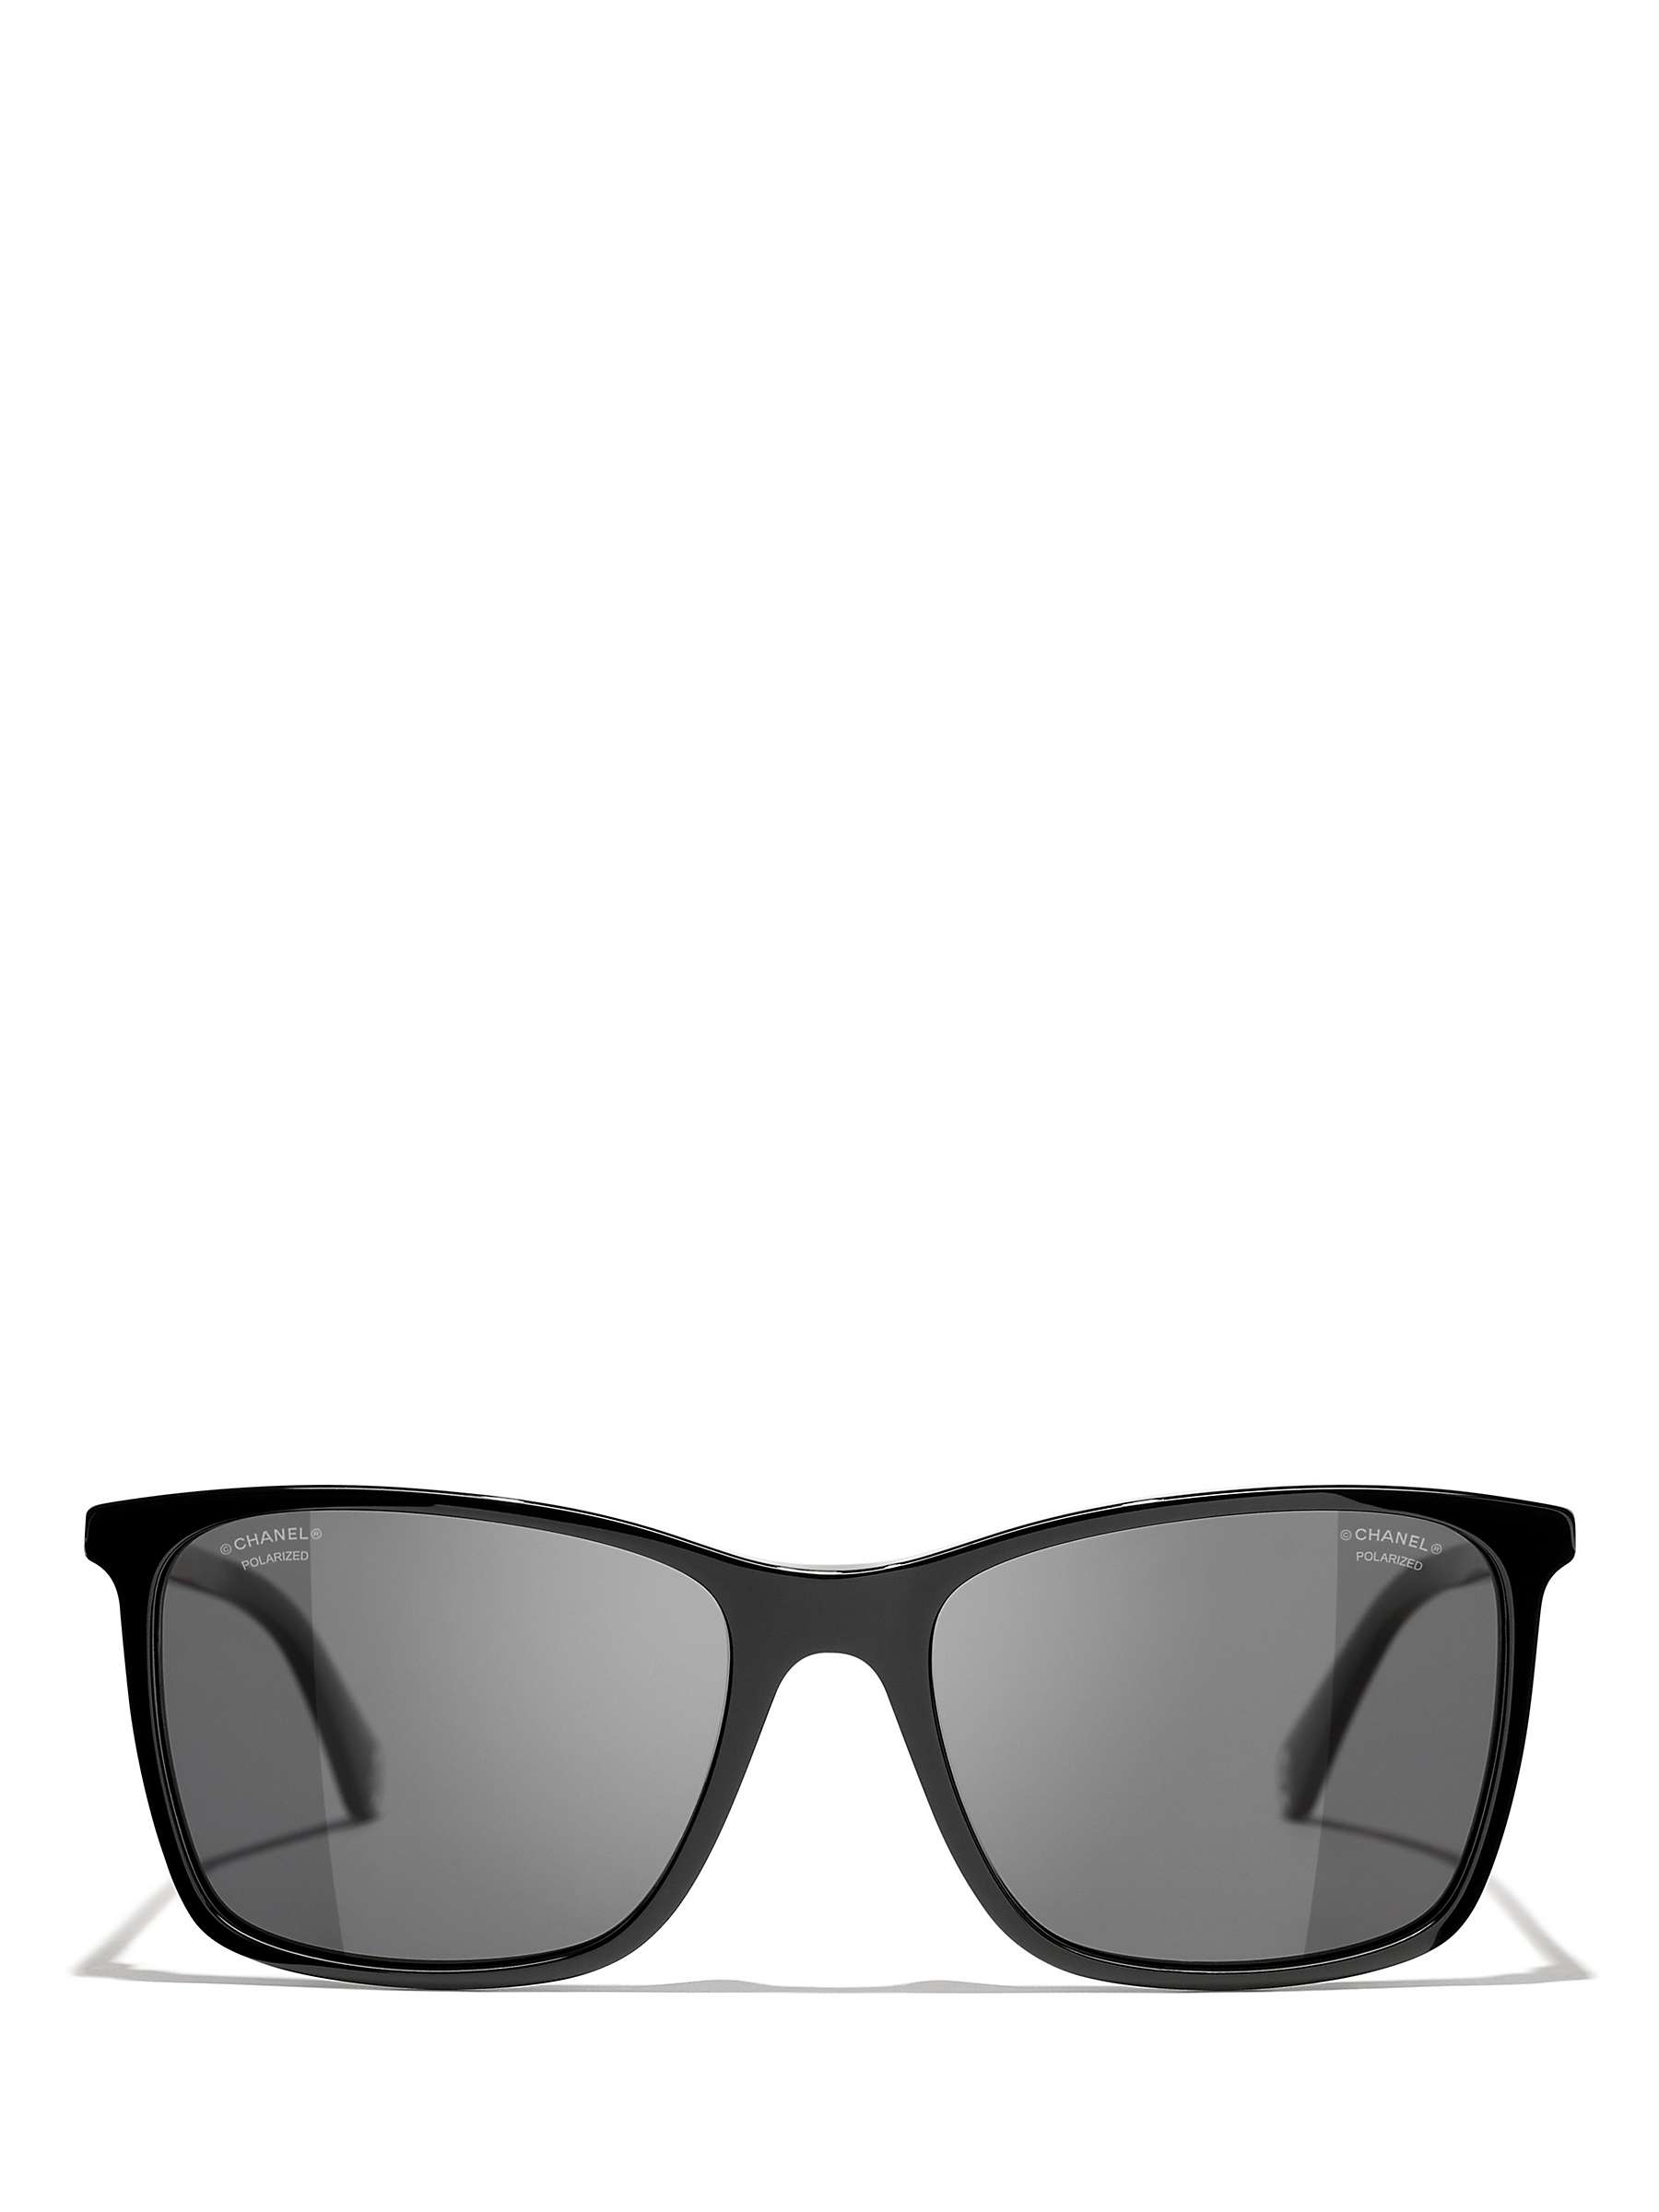 Buy CHANEL Rectangular Sunglasses CH5447 Black/Grey Online at johnlewis.com